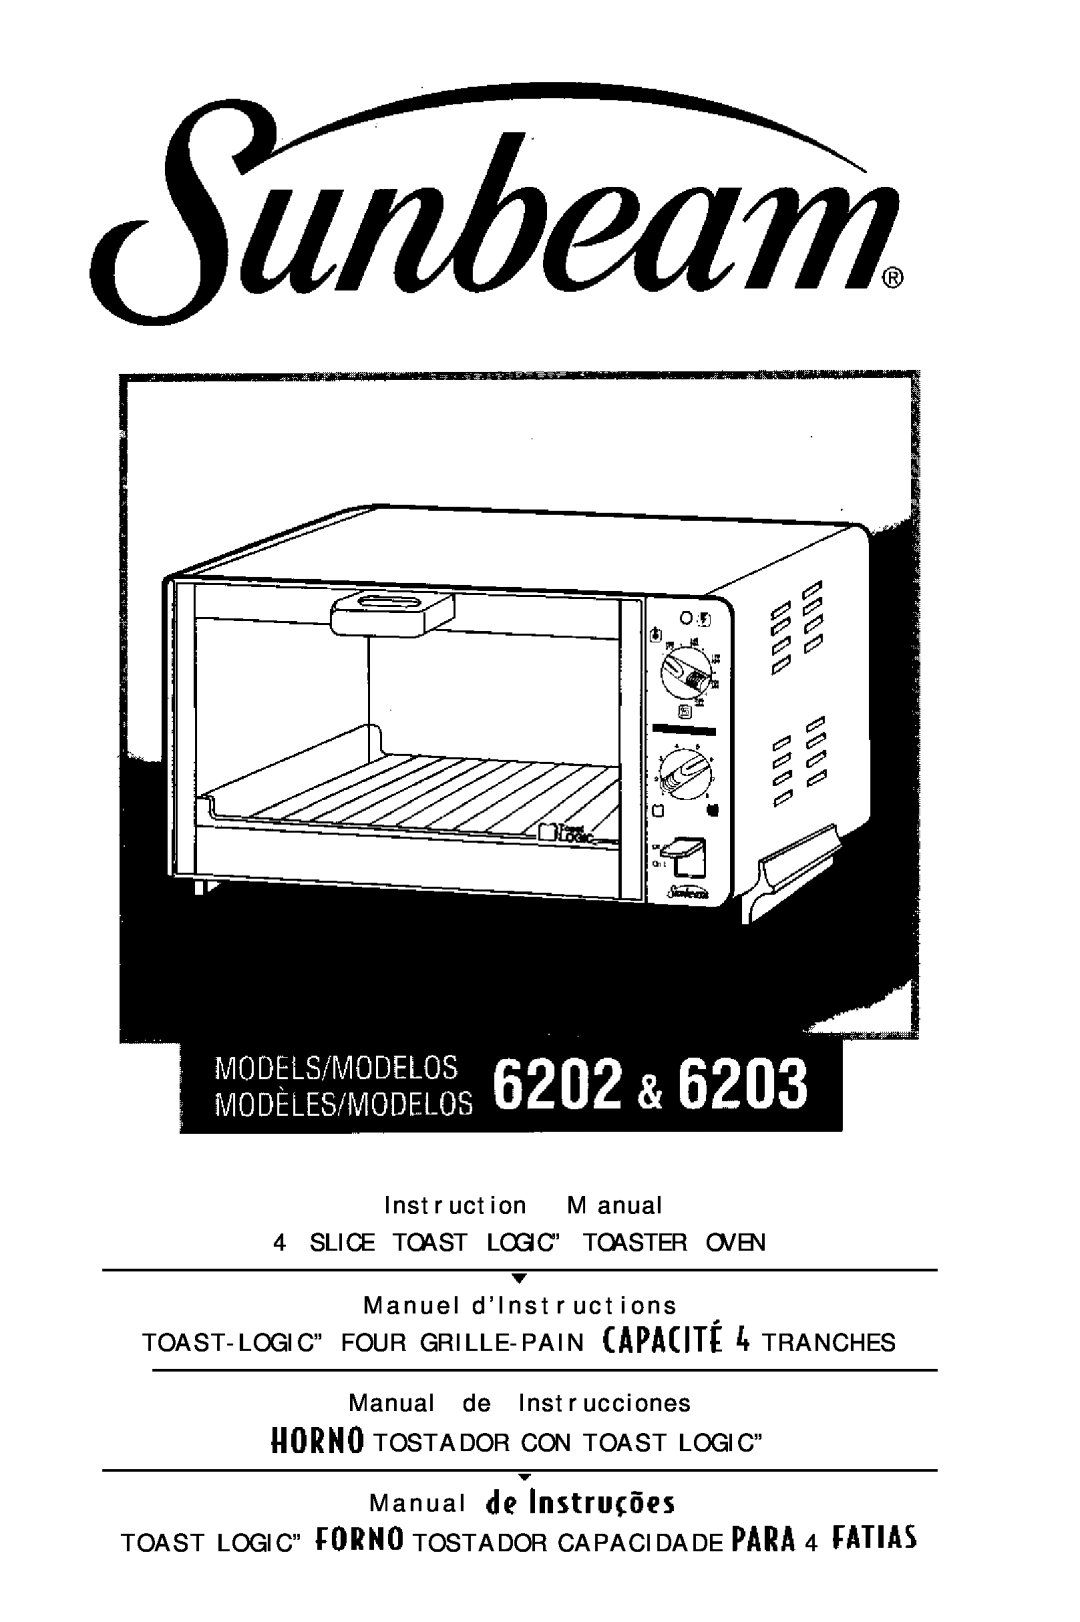 Sunbeam 6202, 6203 instruction manual Instruction M anual, Slic E Toast Logic” Toaster Oven, M a n u a l de nstru@es 